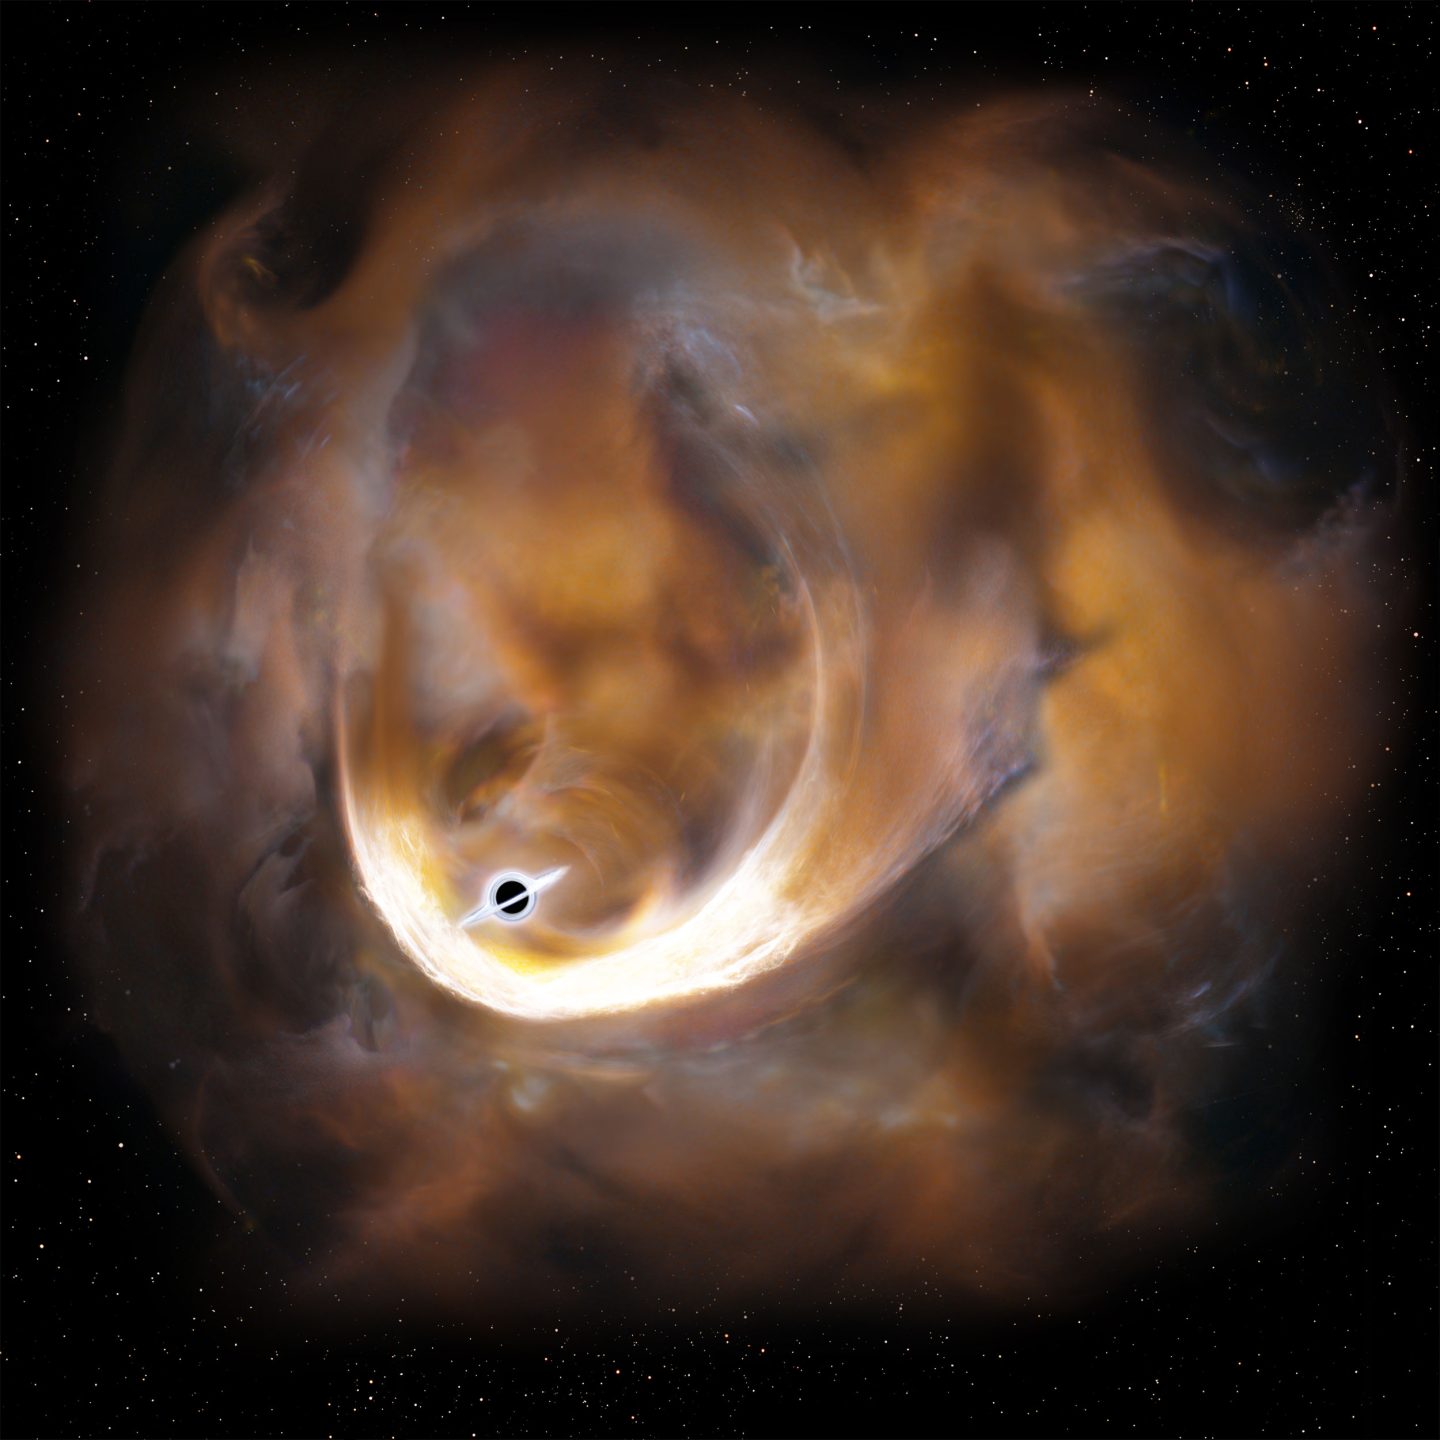 اكتشاف ثقب أسود غير مرئي خارج مجرتنا